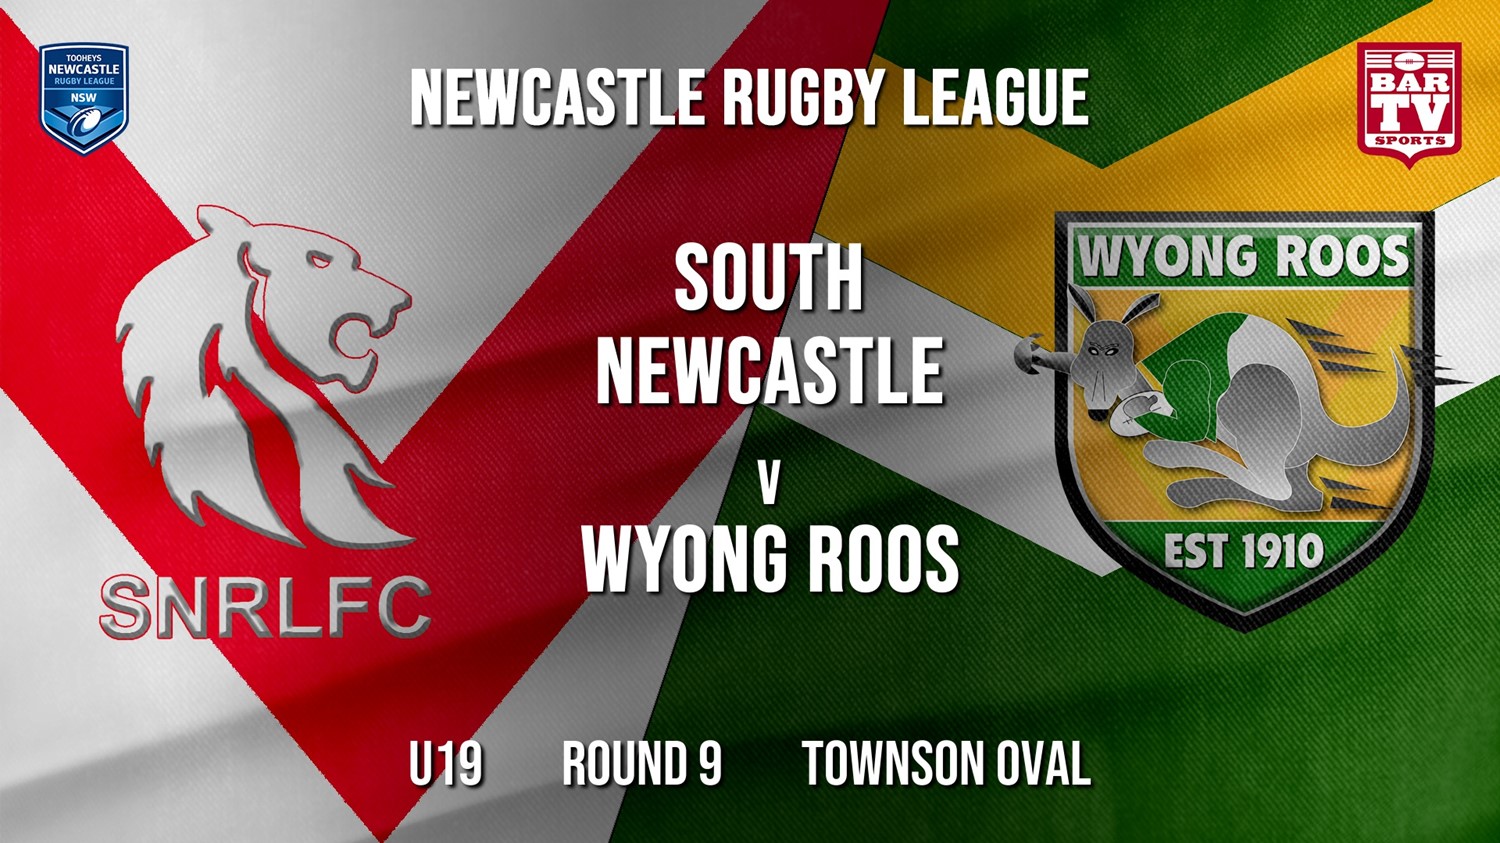 Newcastle Rugby League Round 9 - U19 - South Newcastle v Wyong Roos Slate Image